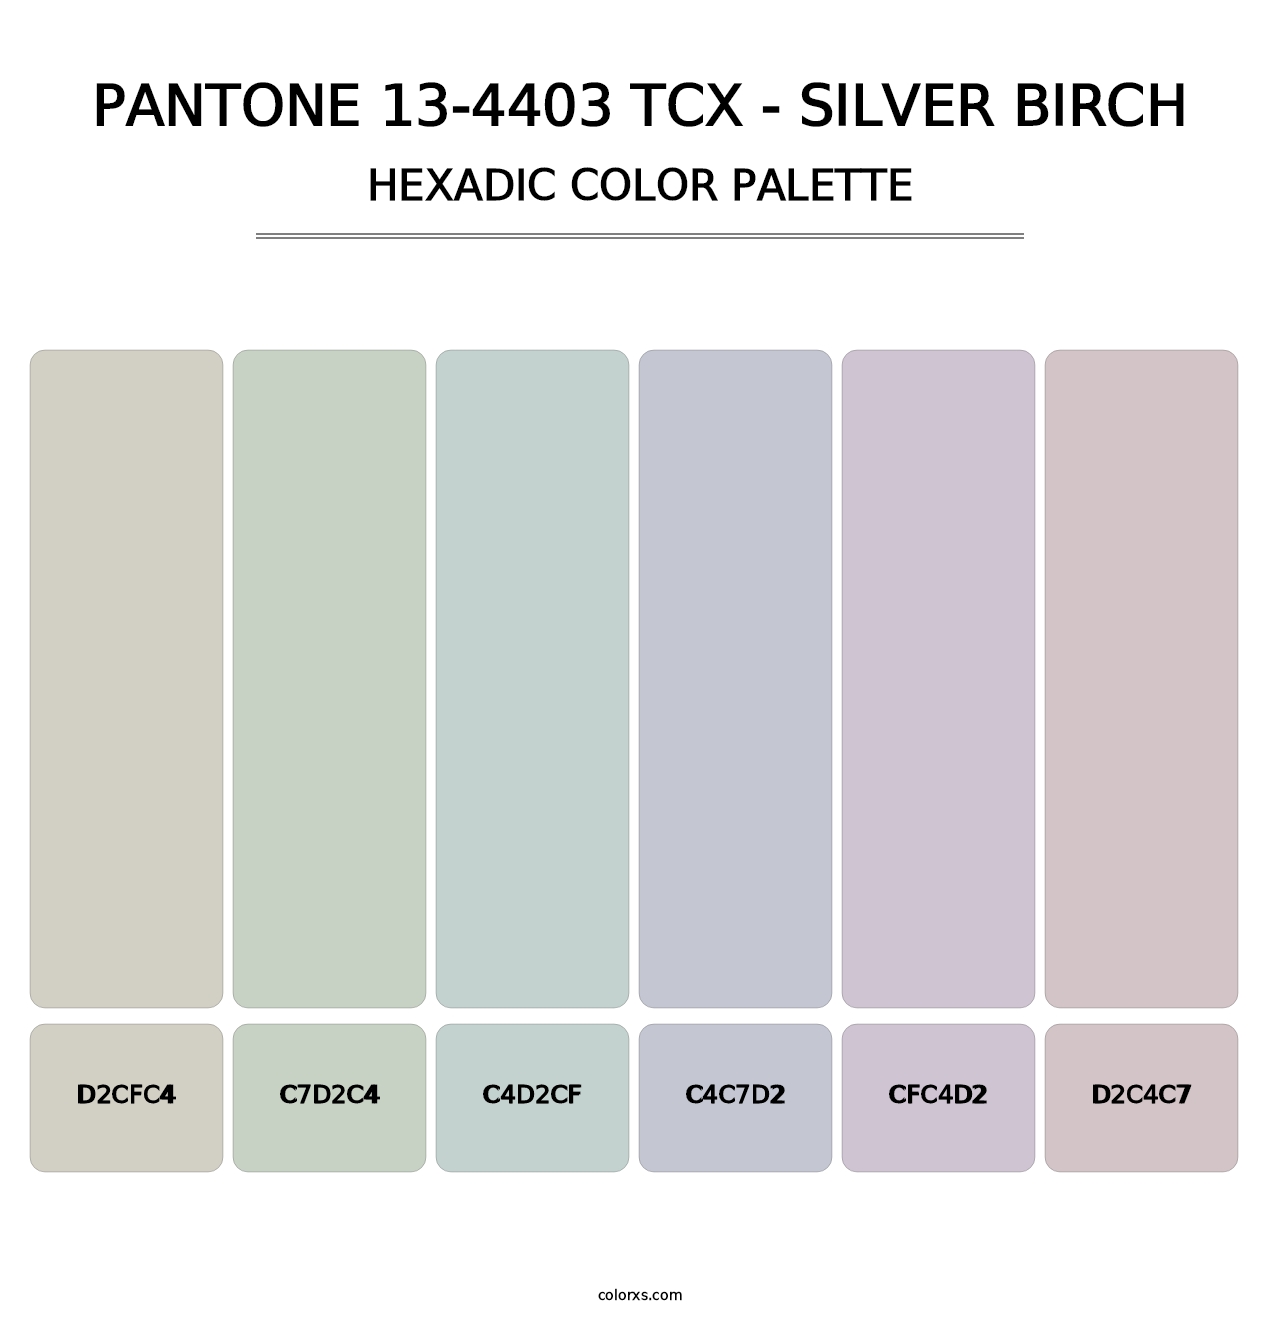 PANTONE 13-4403 TCX - Silver Birch - Hexadic Color Palette